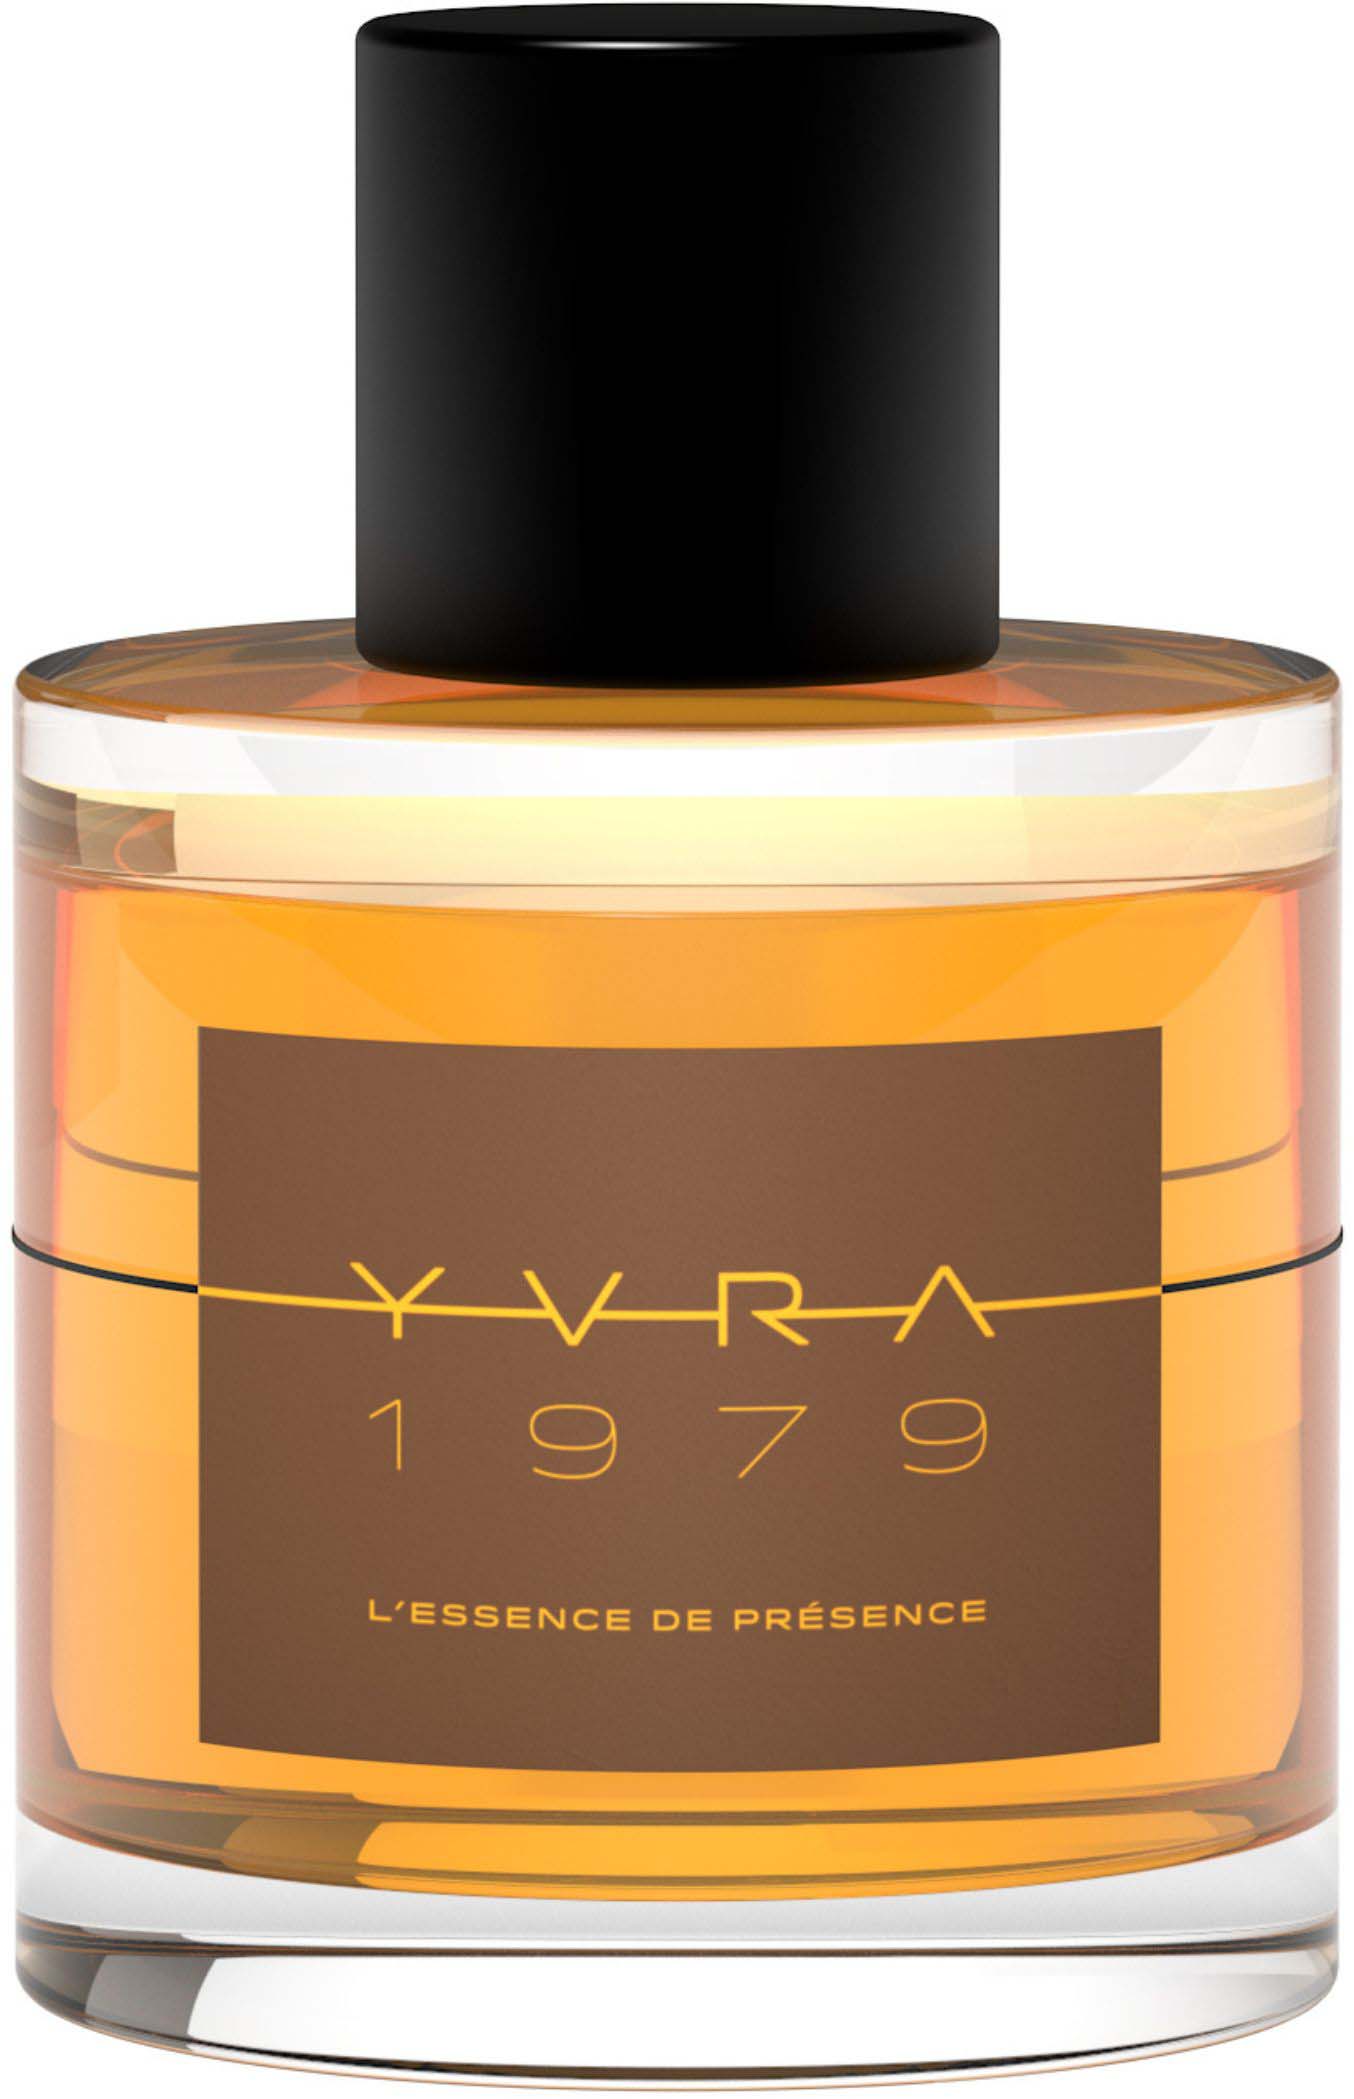 yvra 1979 - l'essence de presence woda perfumowana 100 ml   